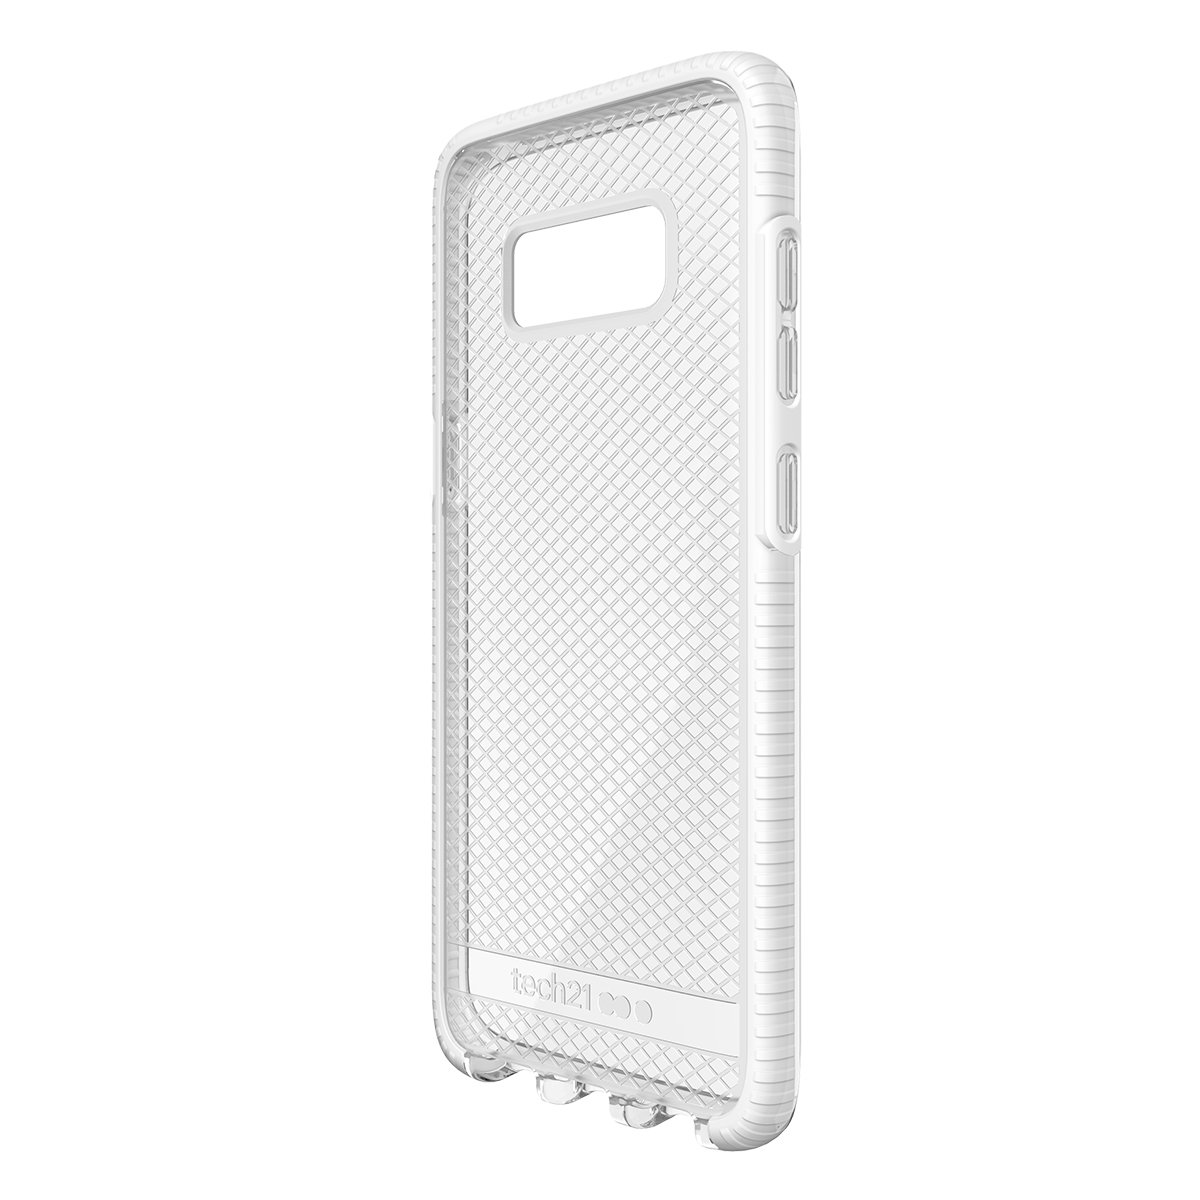 Tech21 Evo Check Case for Galaxy S8 - Clear/White